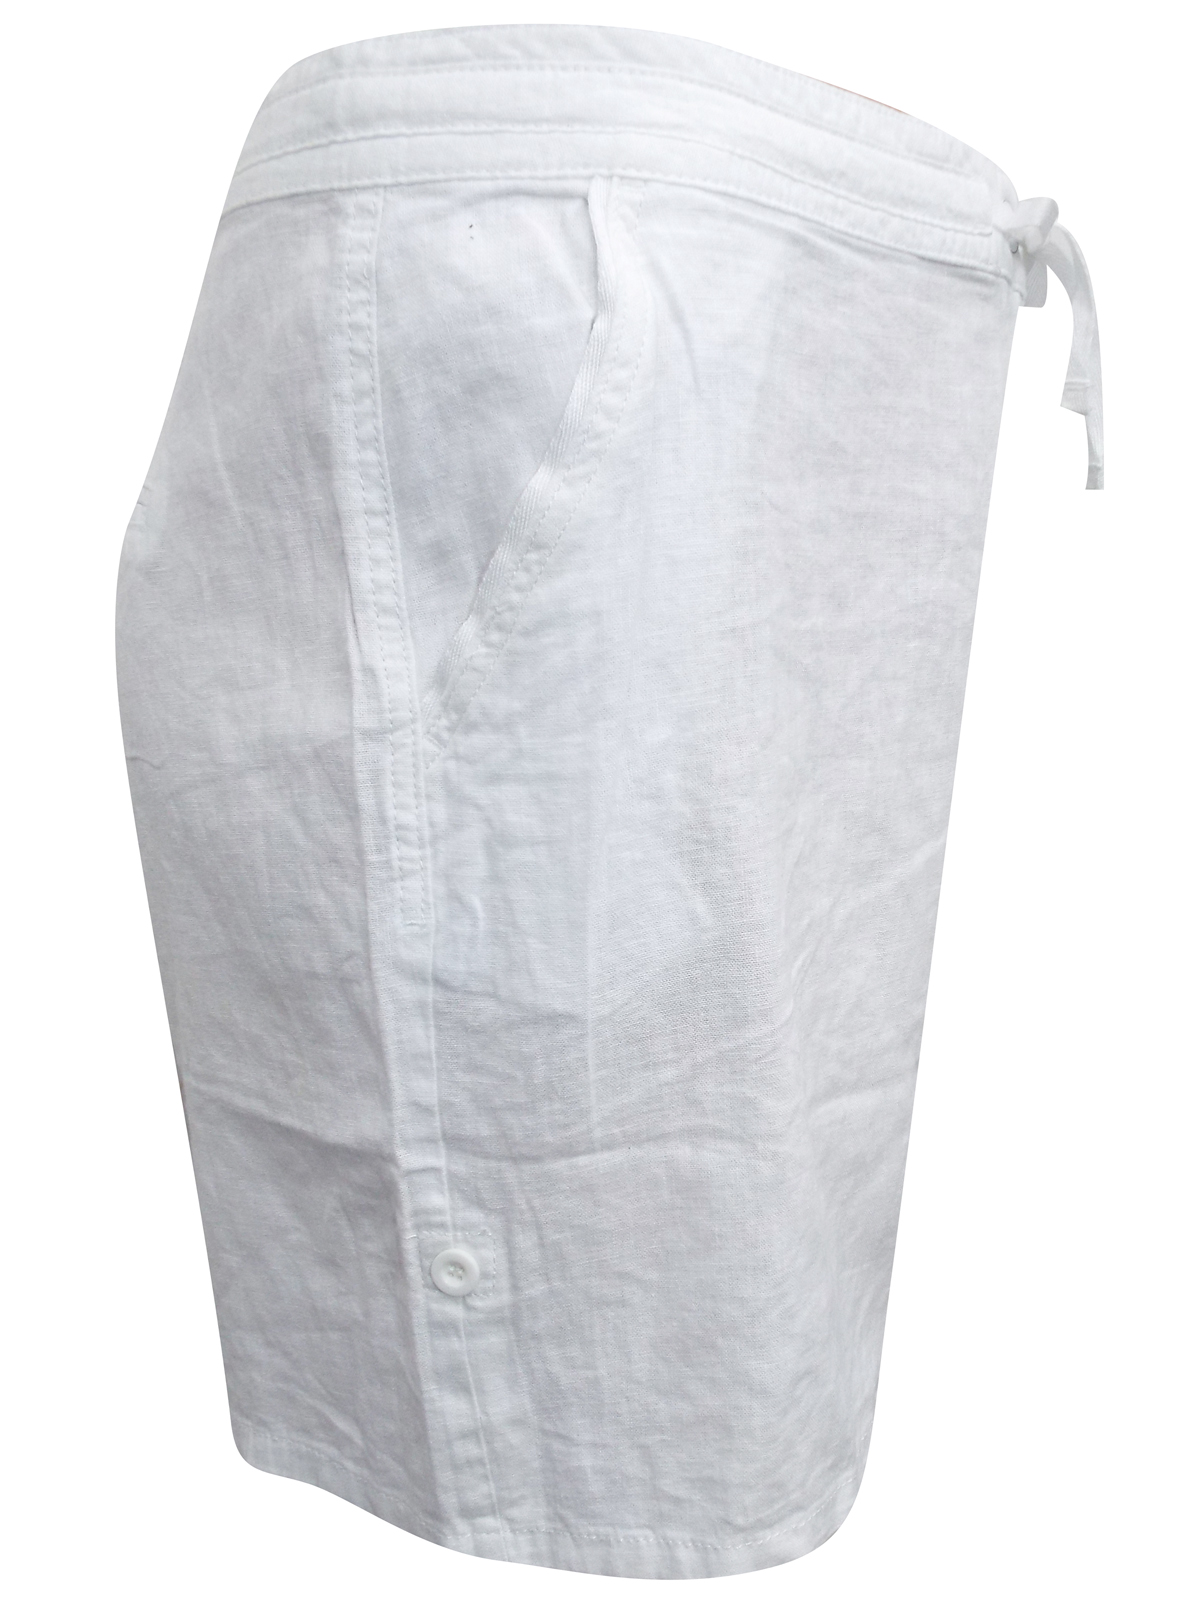 N3XT WHITE Linen Blend Drawstring Waist Shorts - Plus Size 18 to 26